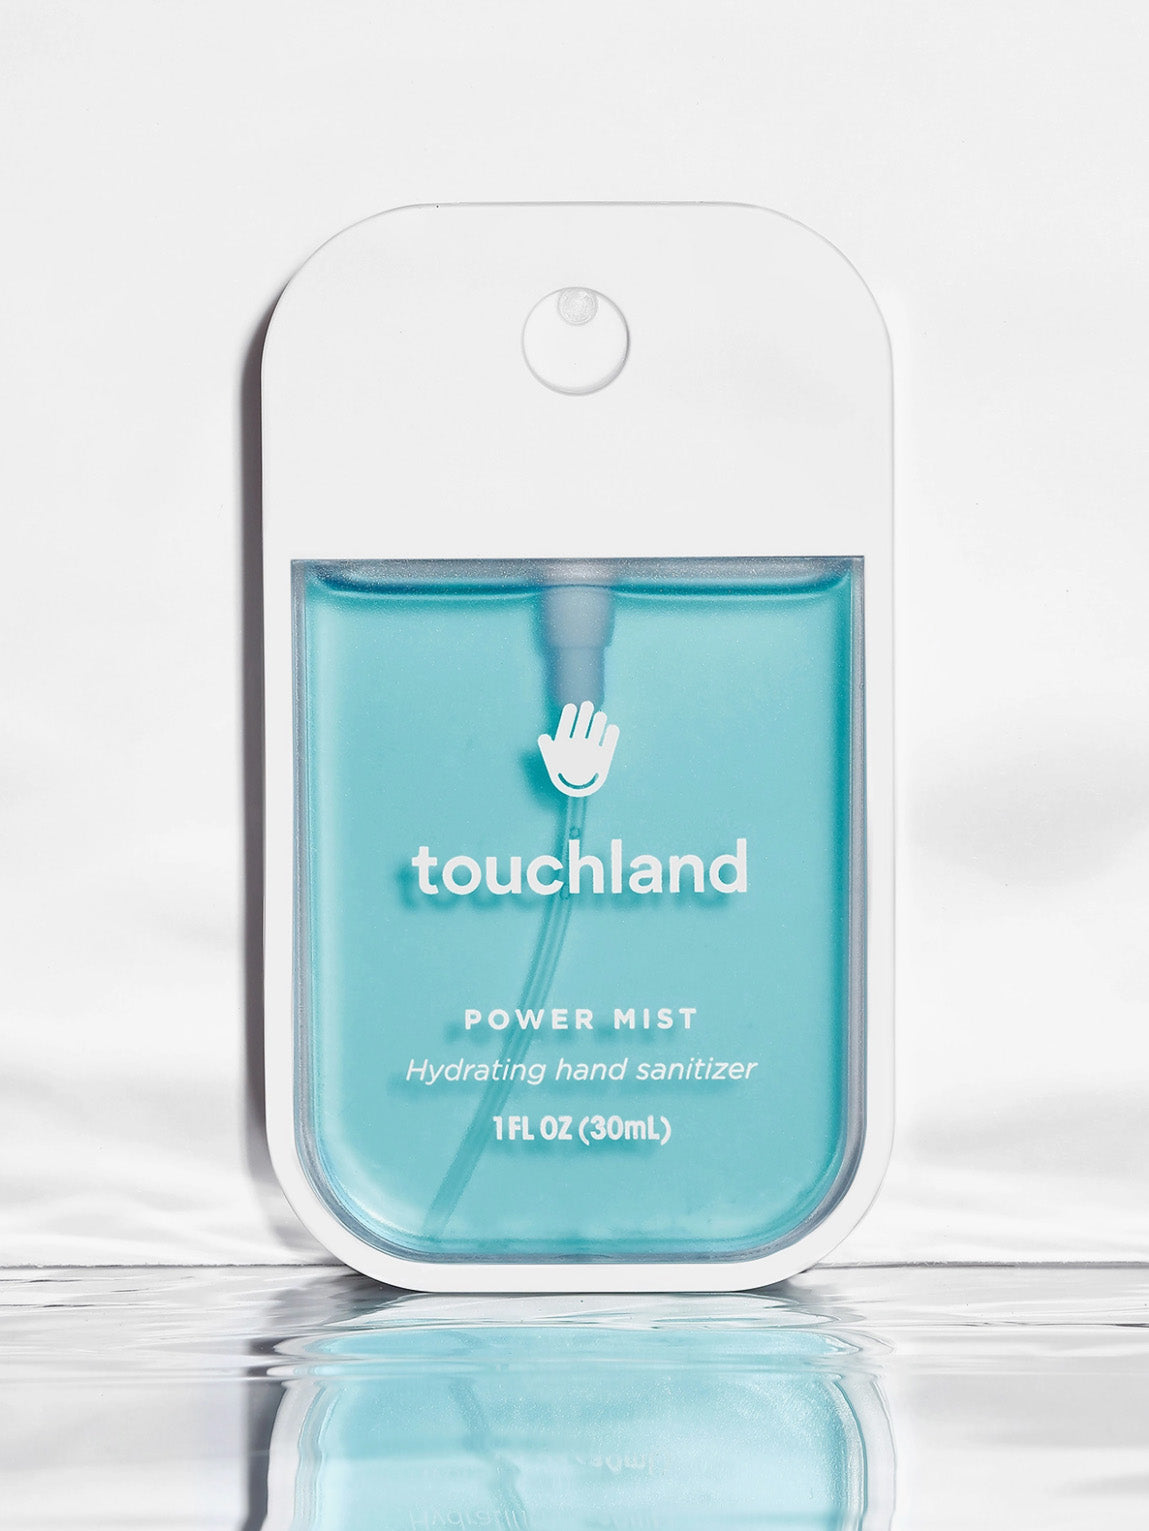 blue sandalwood power mist hand sanitizer